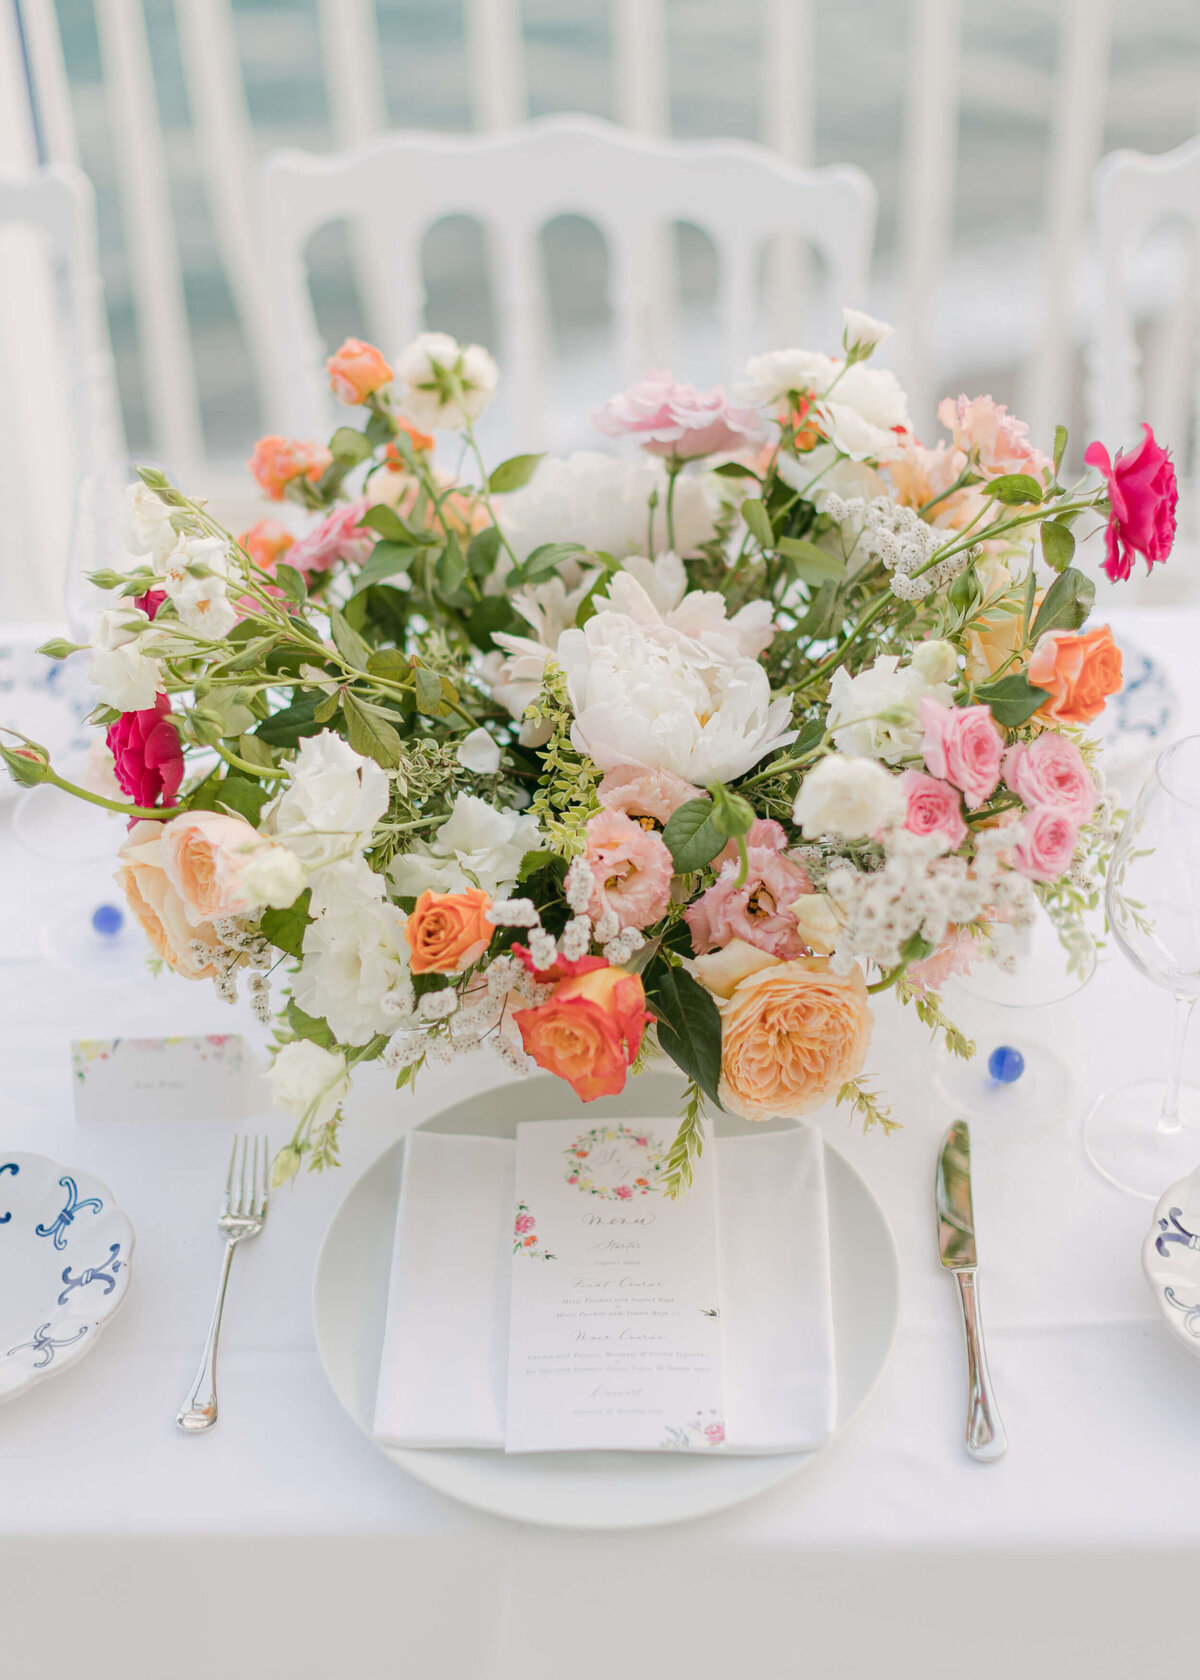 chloe-winstanley-italian-wedding-positano-rada-resturant-table-flowers